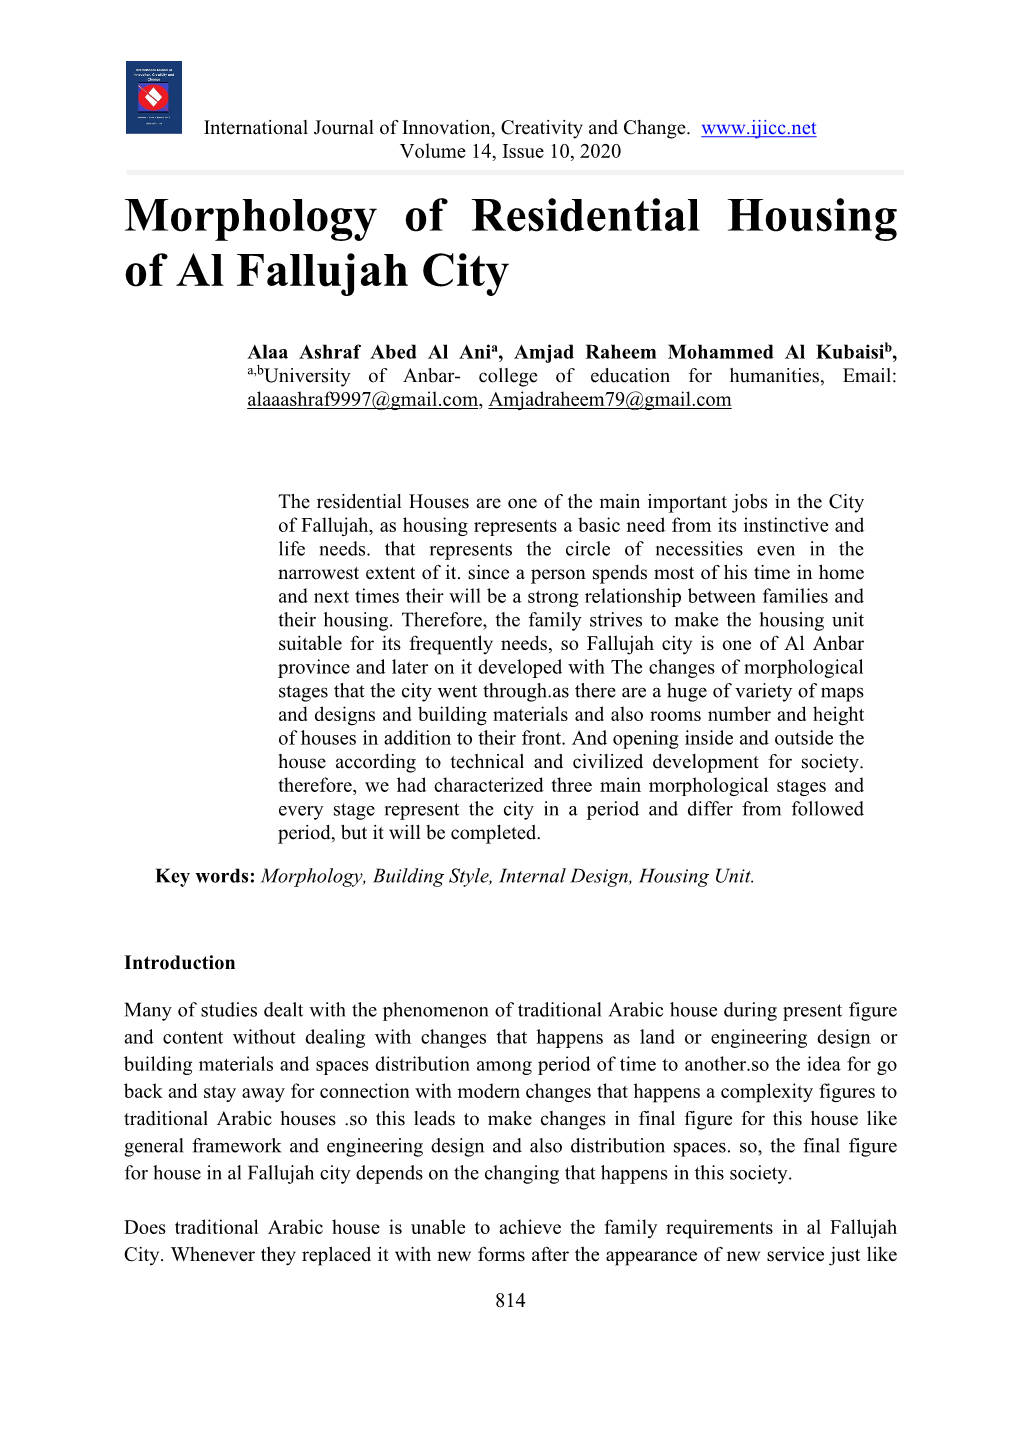 Morphology of Residential Housing of Al Fallujah City